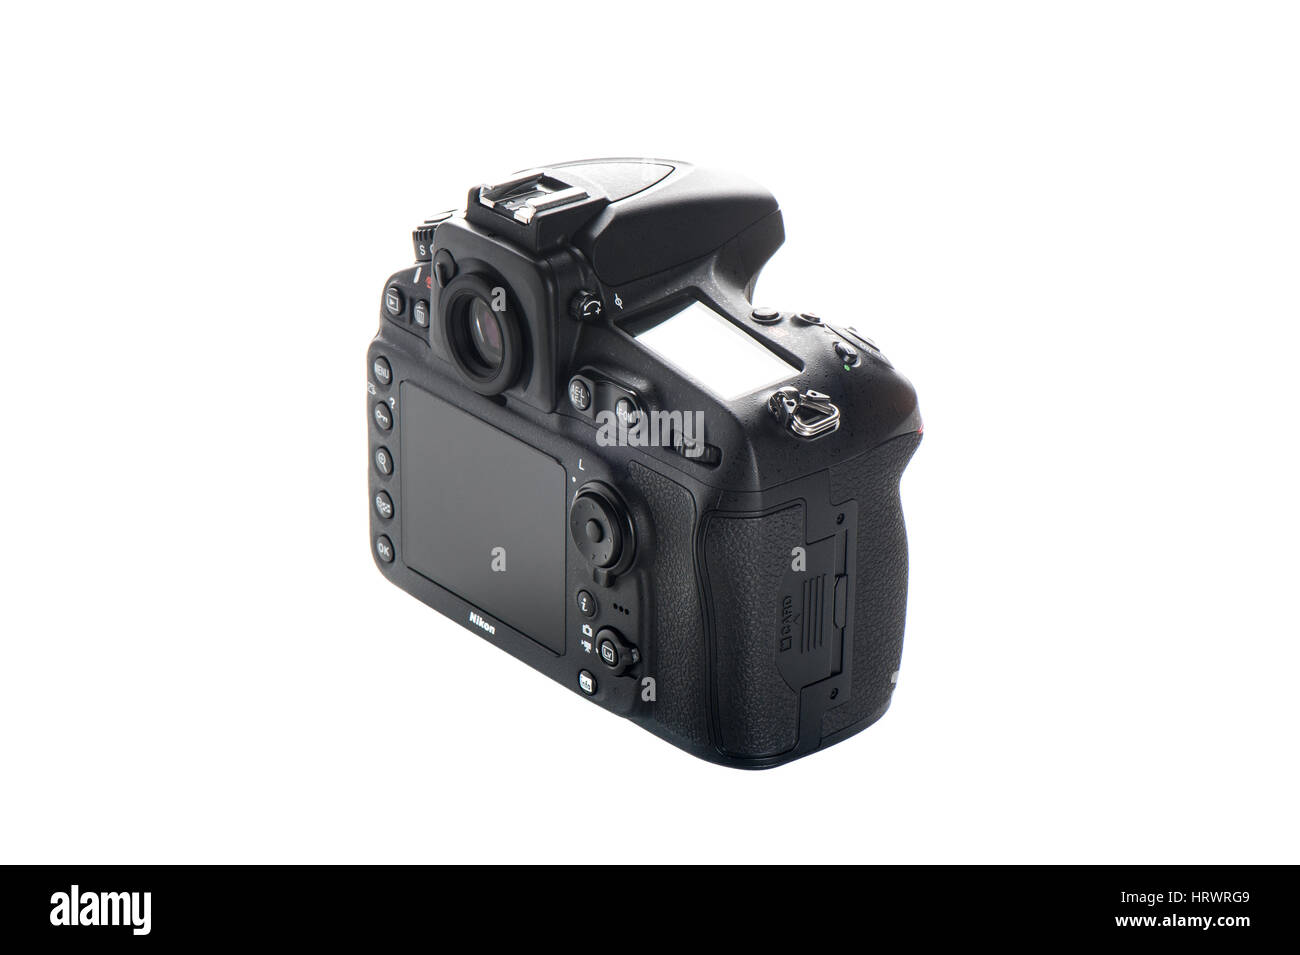 BANGKOK, THAILAND - SEPTEMBER 29, 2014: Nikon D810 camera body, the first digital SLR camera in Nikon's history to offer a minimum standard sensitivity of ISO 64. Stock Photo